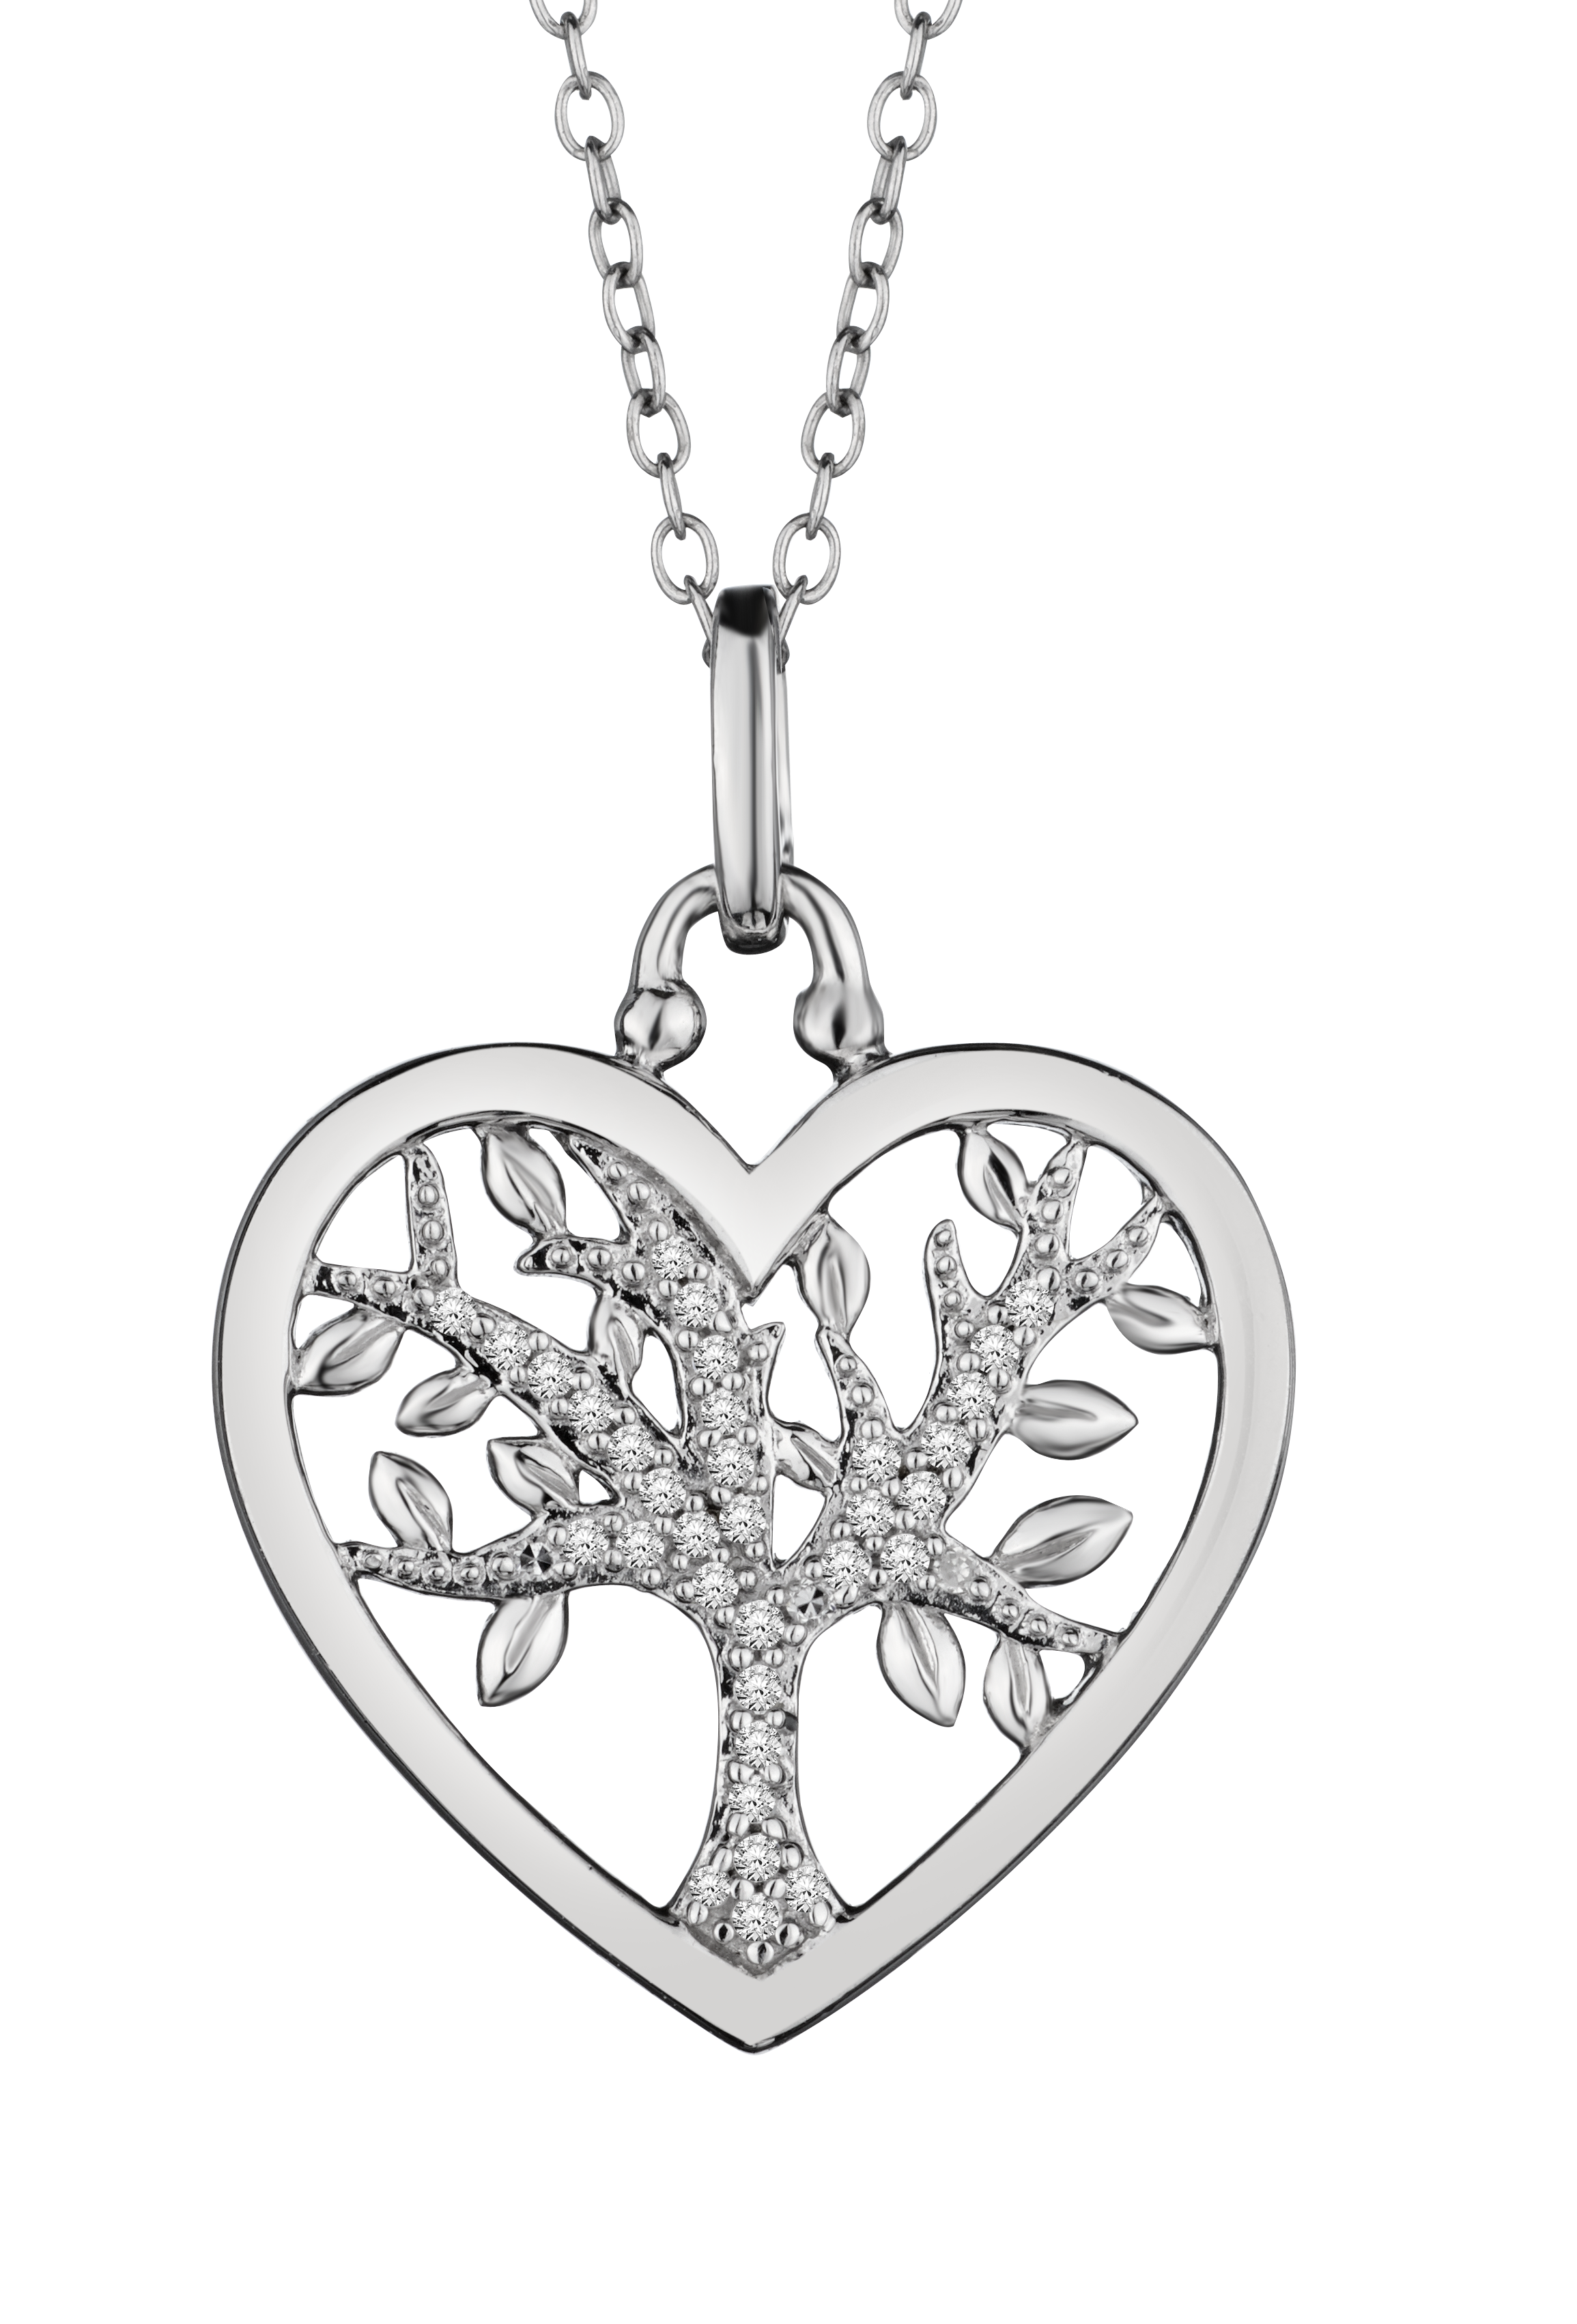 .15 Carat of Diamonds "Tree of Life" Family Pendant, Silver.....................NOW